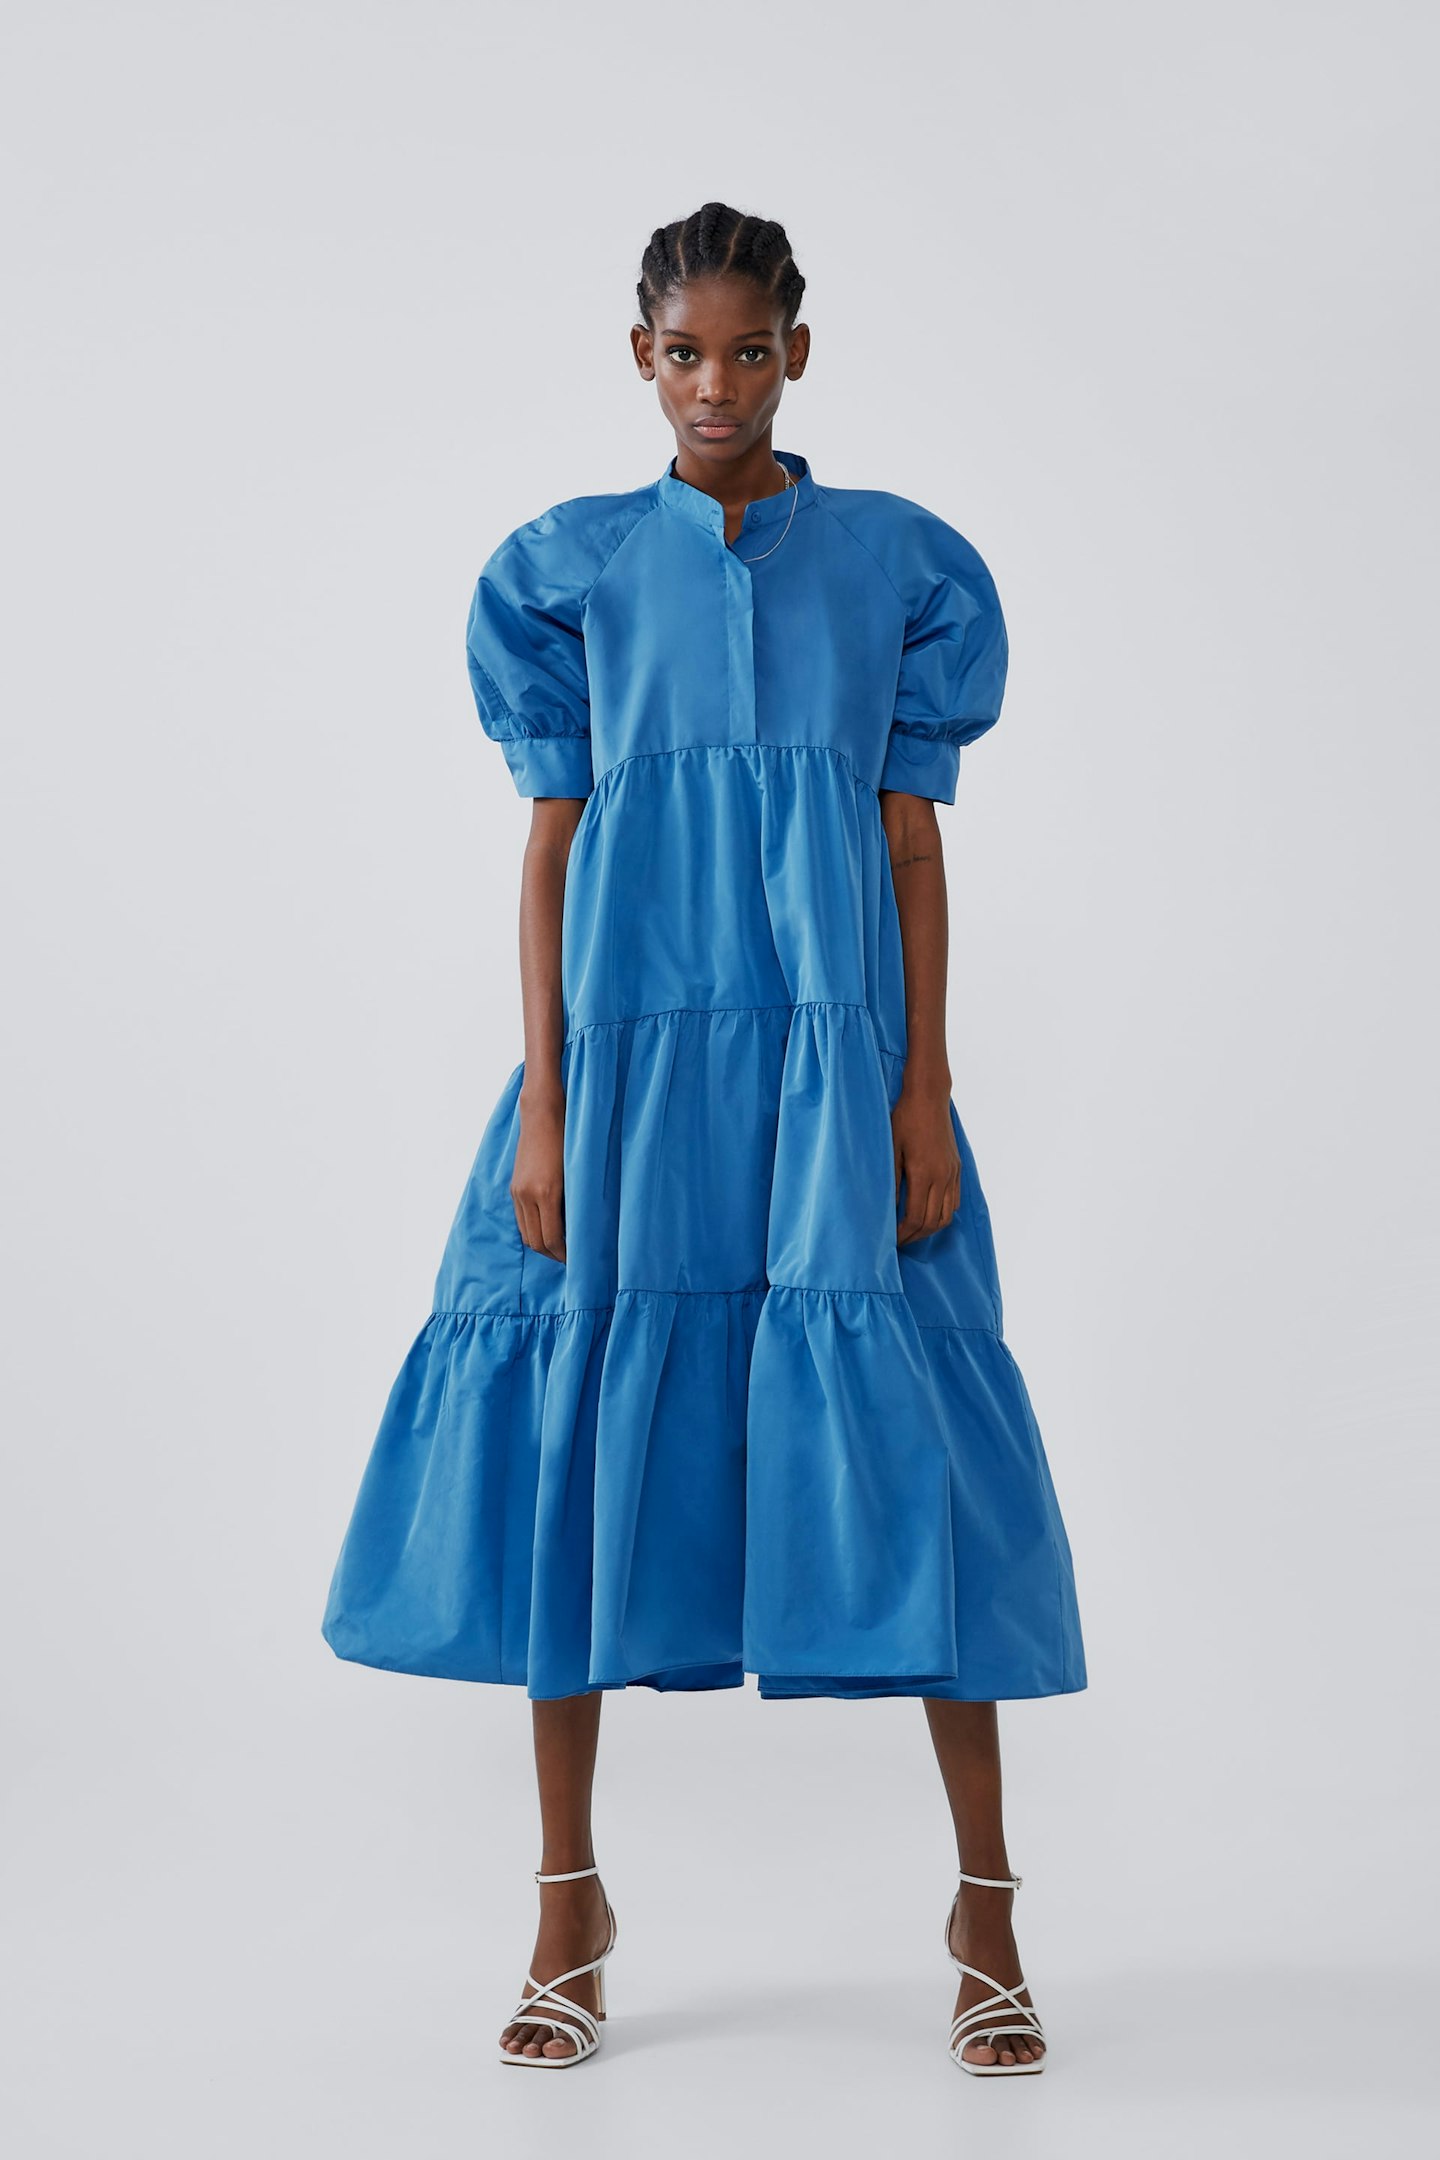 Zara, Full Sleeve Dress, £49.99